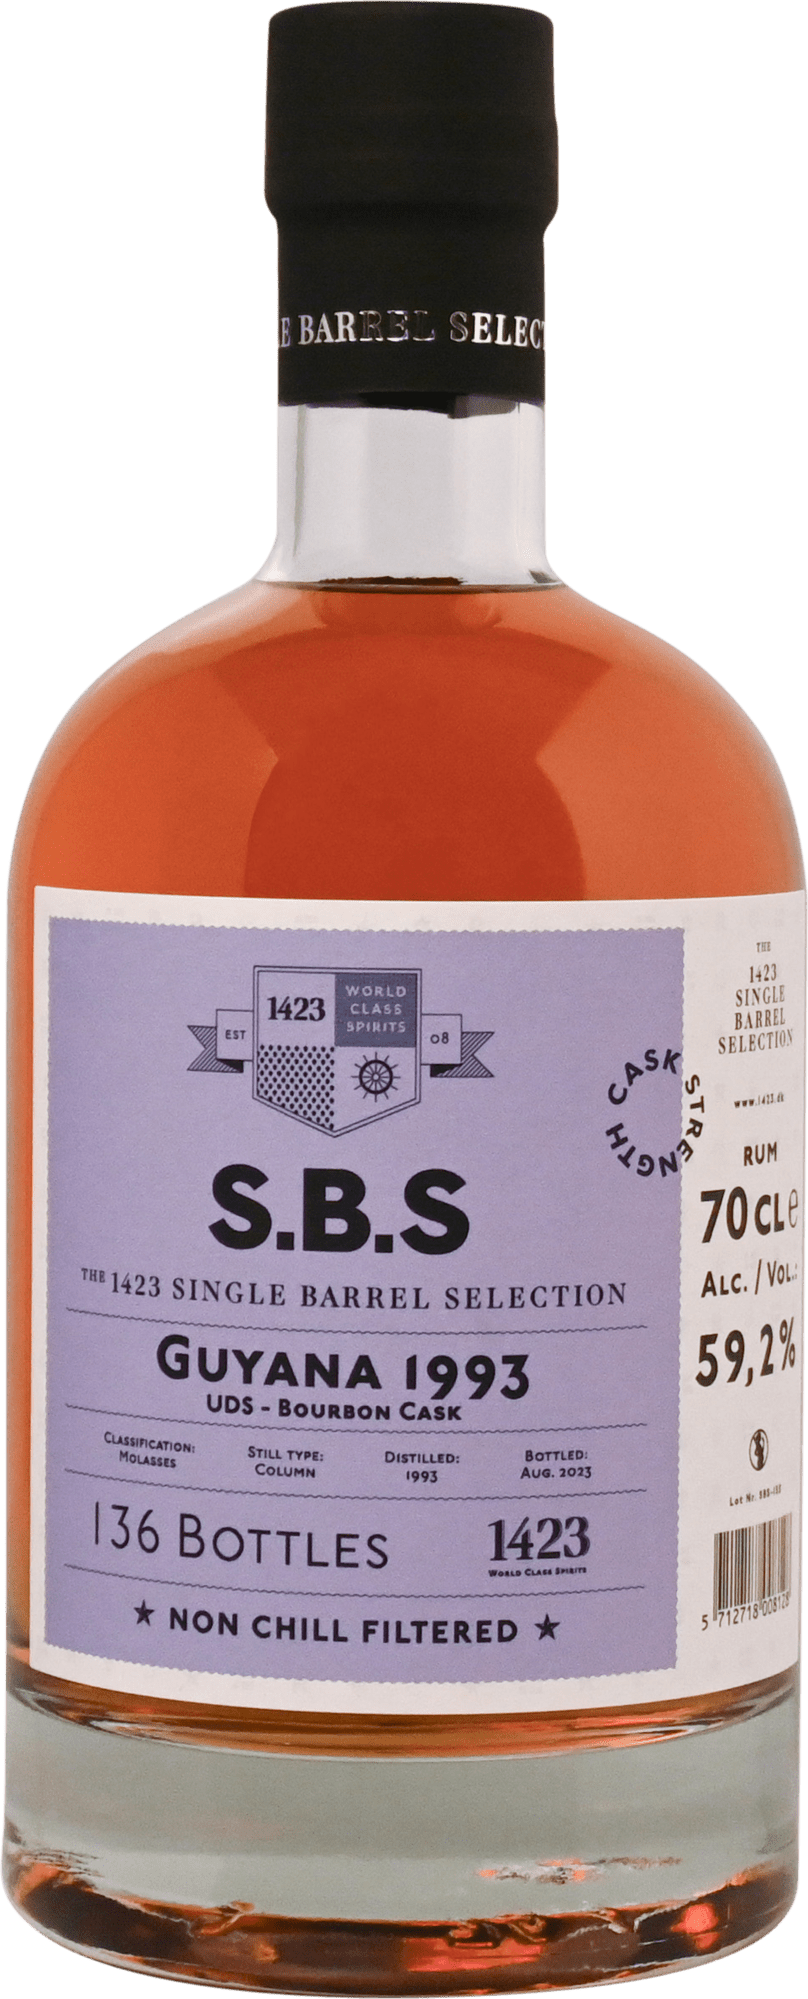 S.B.S Guyana 1993 UDS Bourbon Cask, GIFT